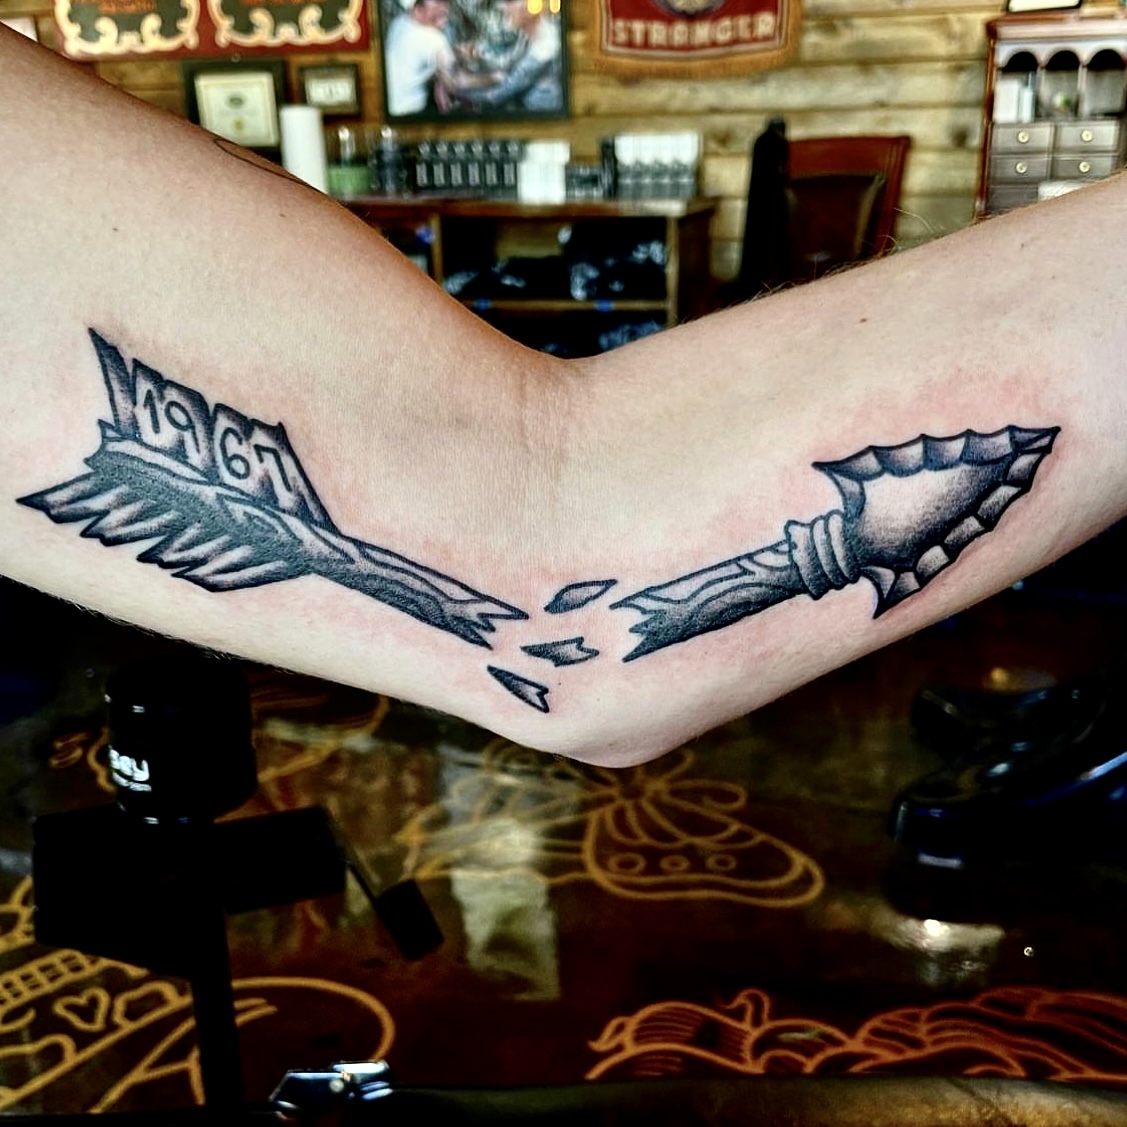 Tattoo of a broken arrow